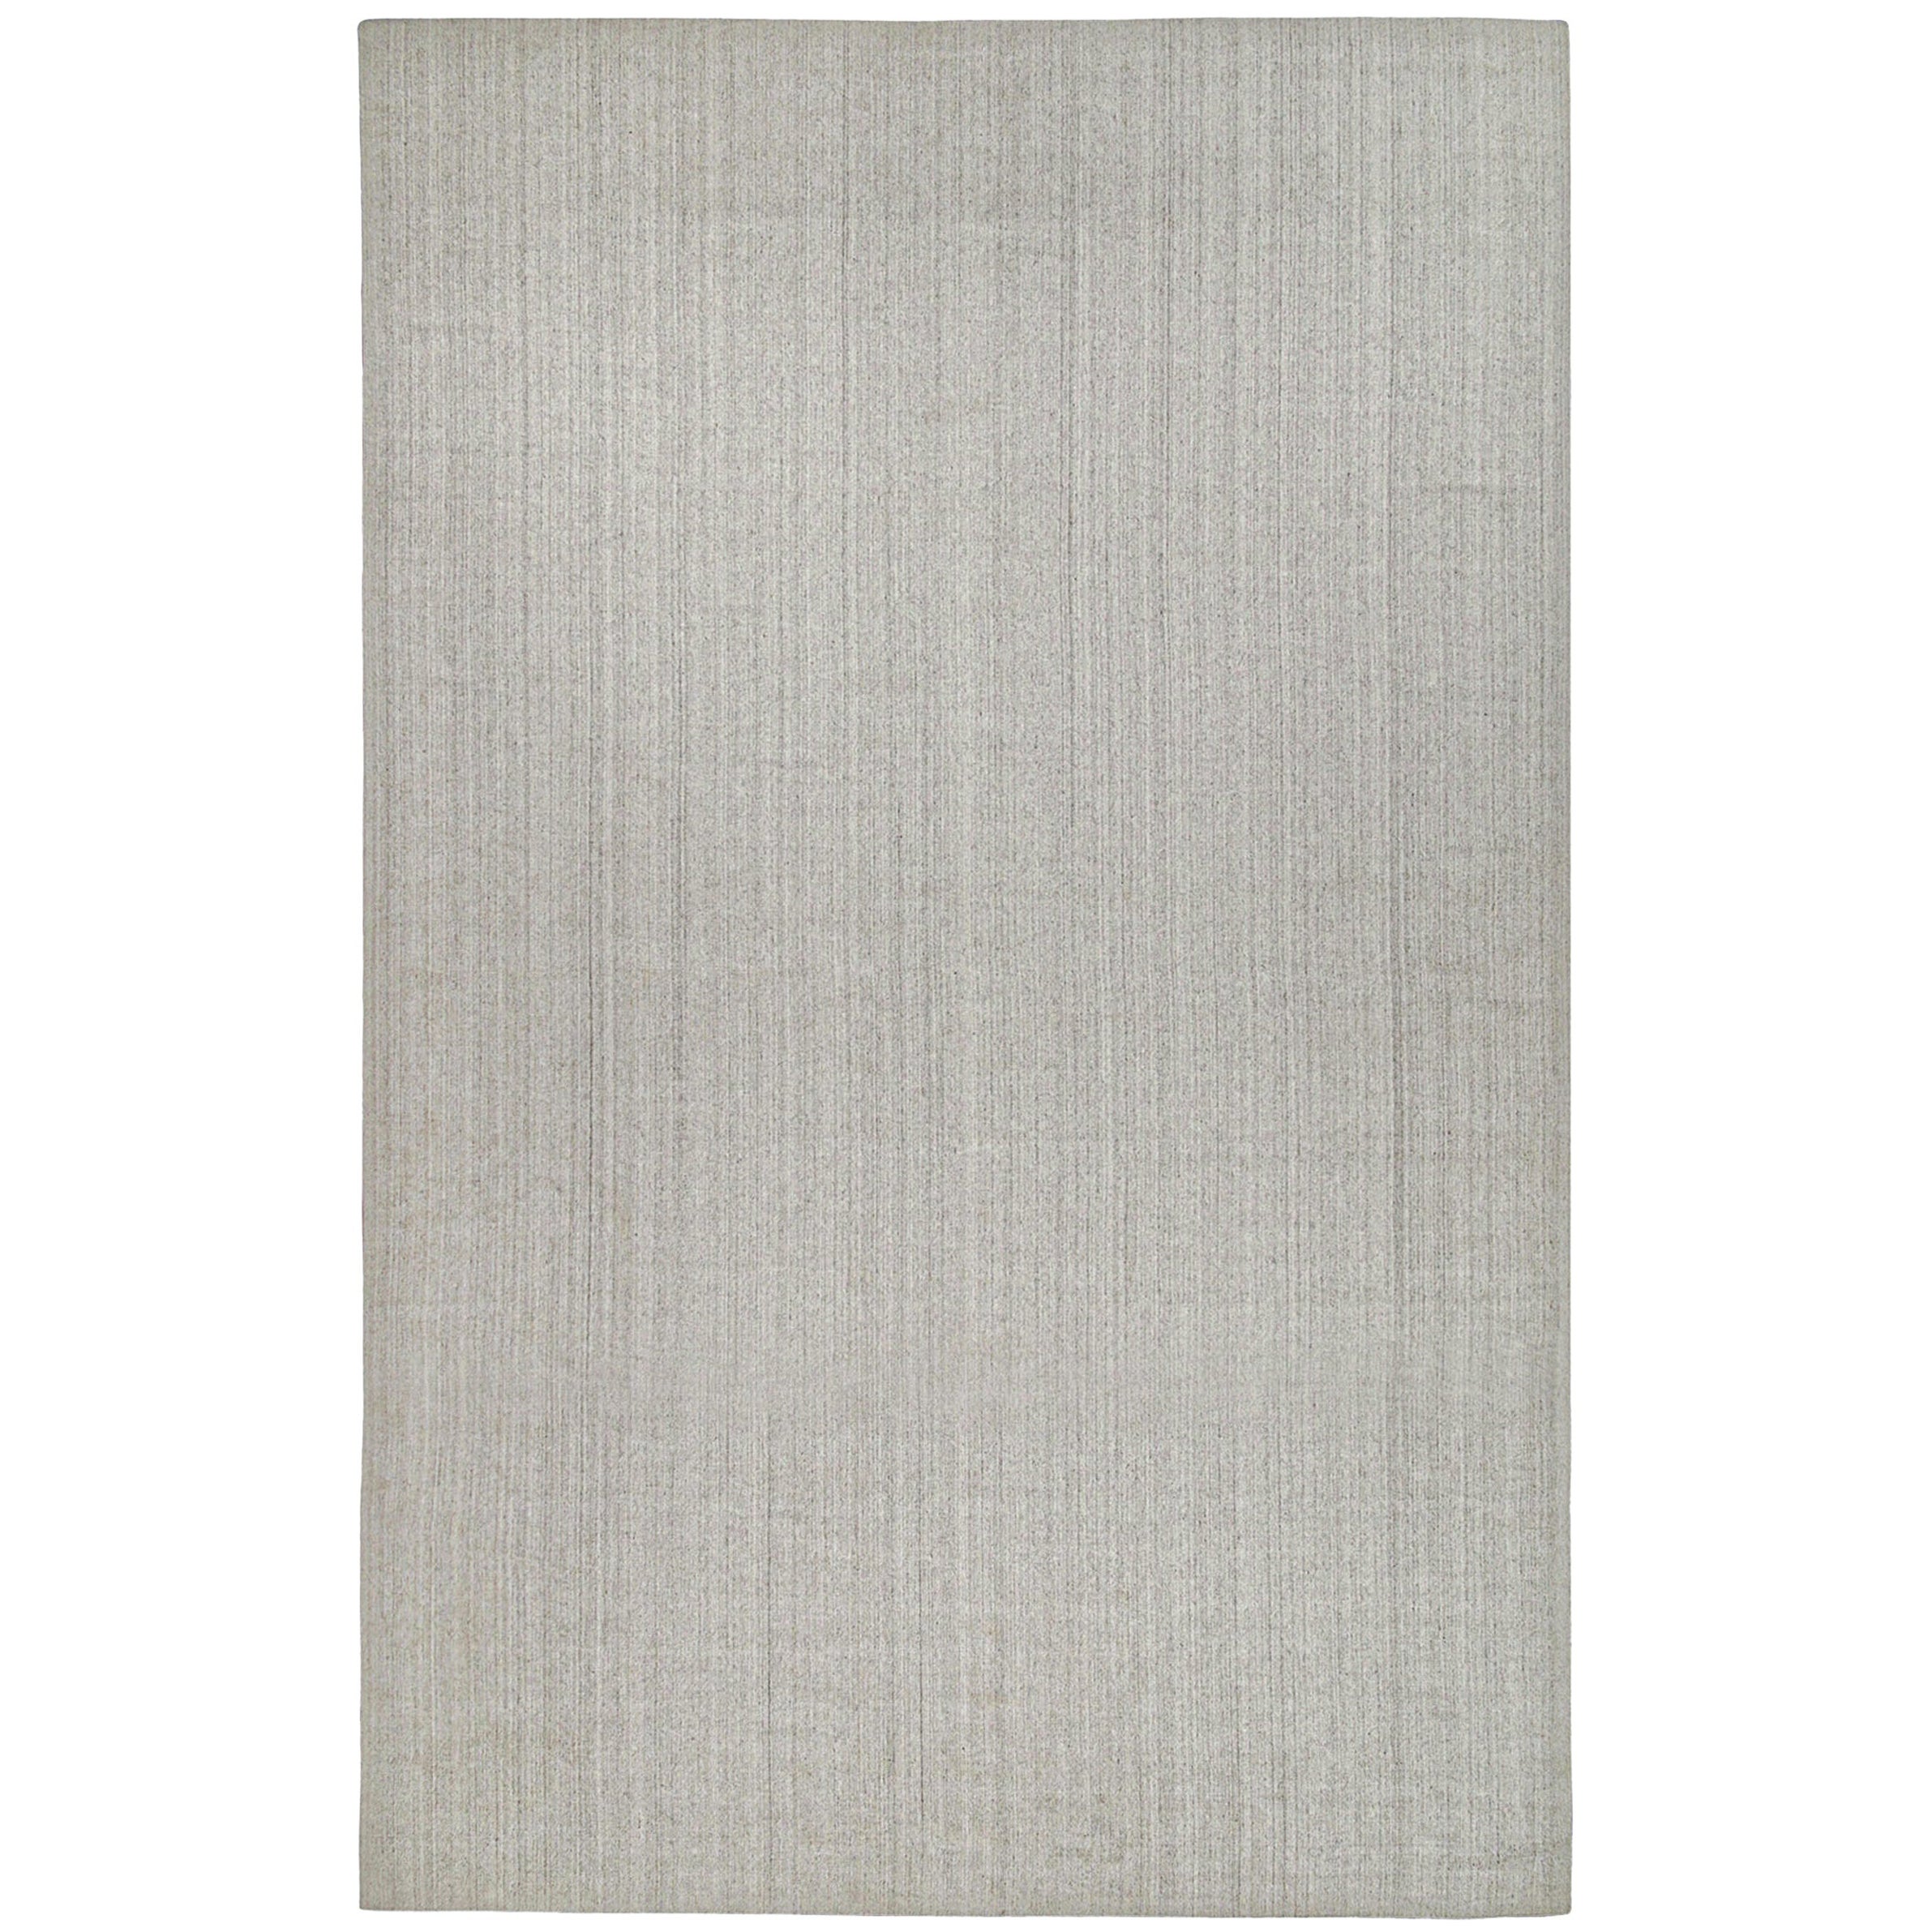 Rug & Kilim's Modern Rug in Solid Gray and Off-White Striae (tapis moderne en gris uni et rayures blanc cassé) en vente